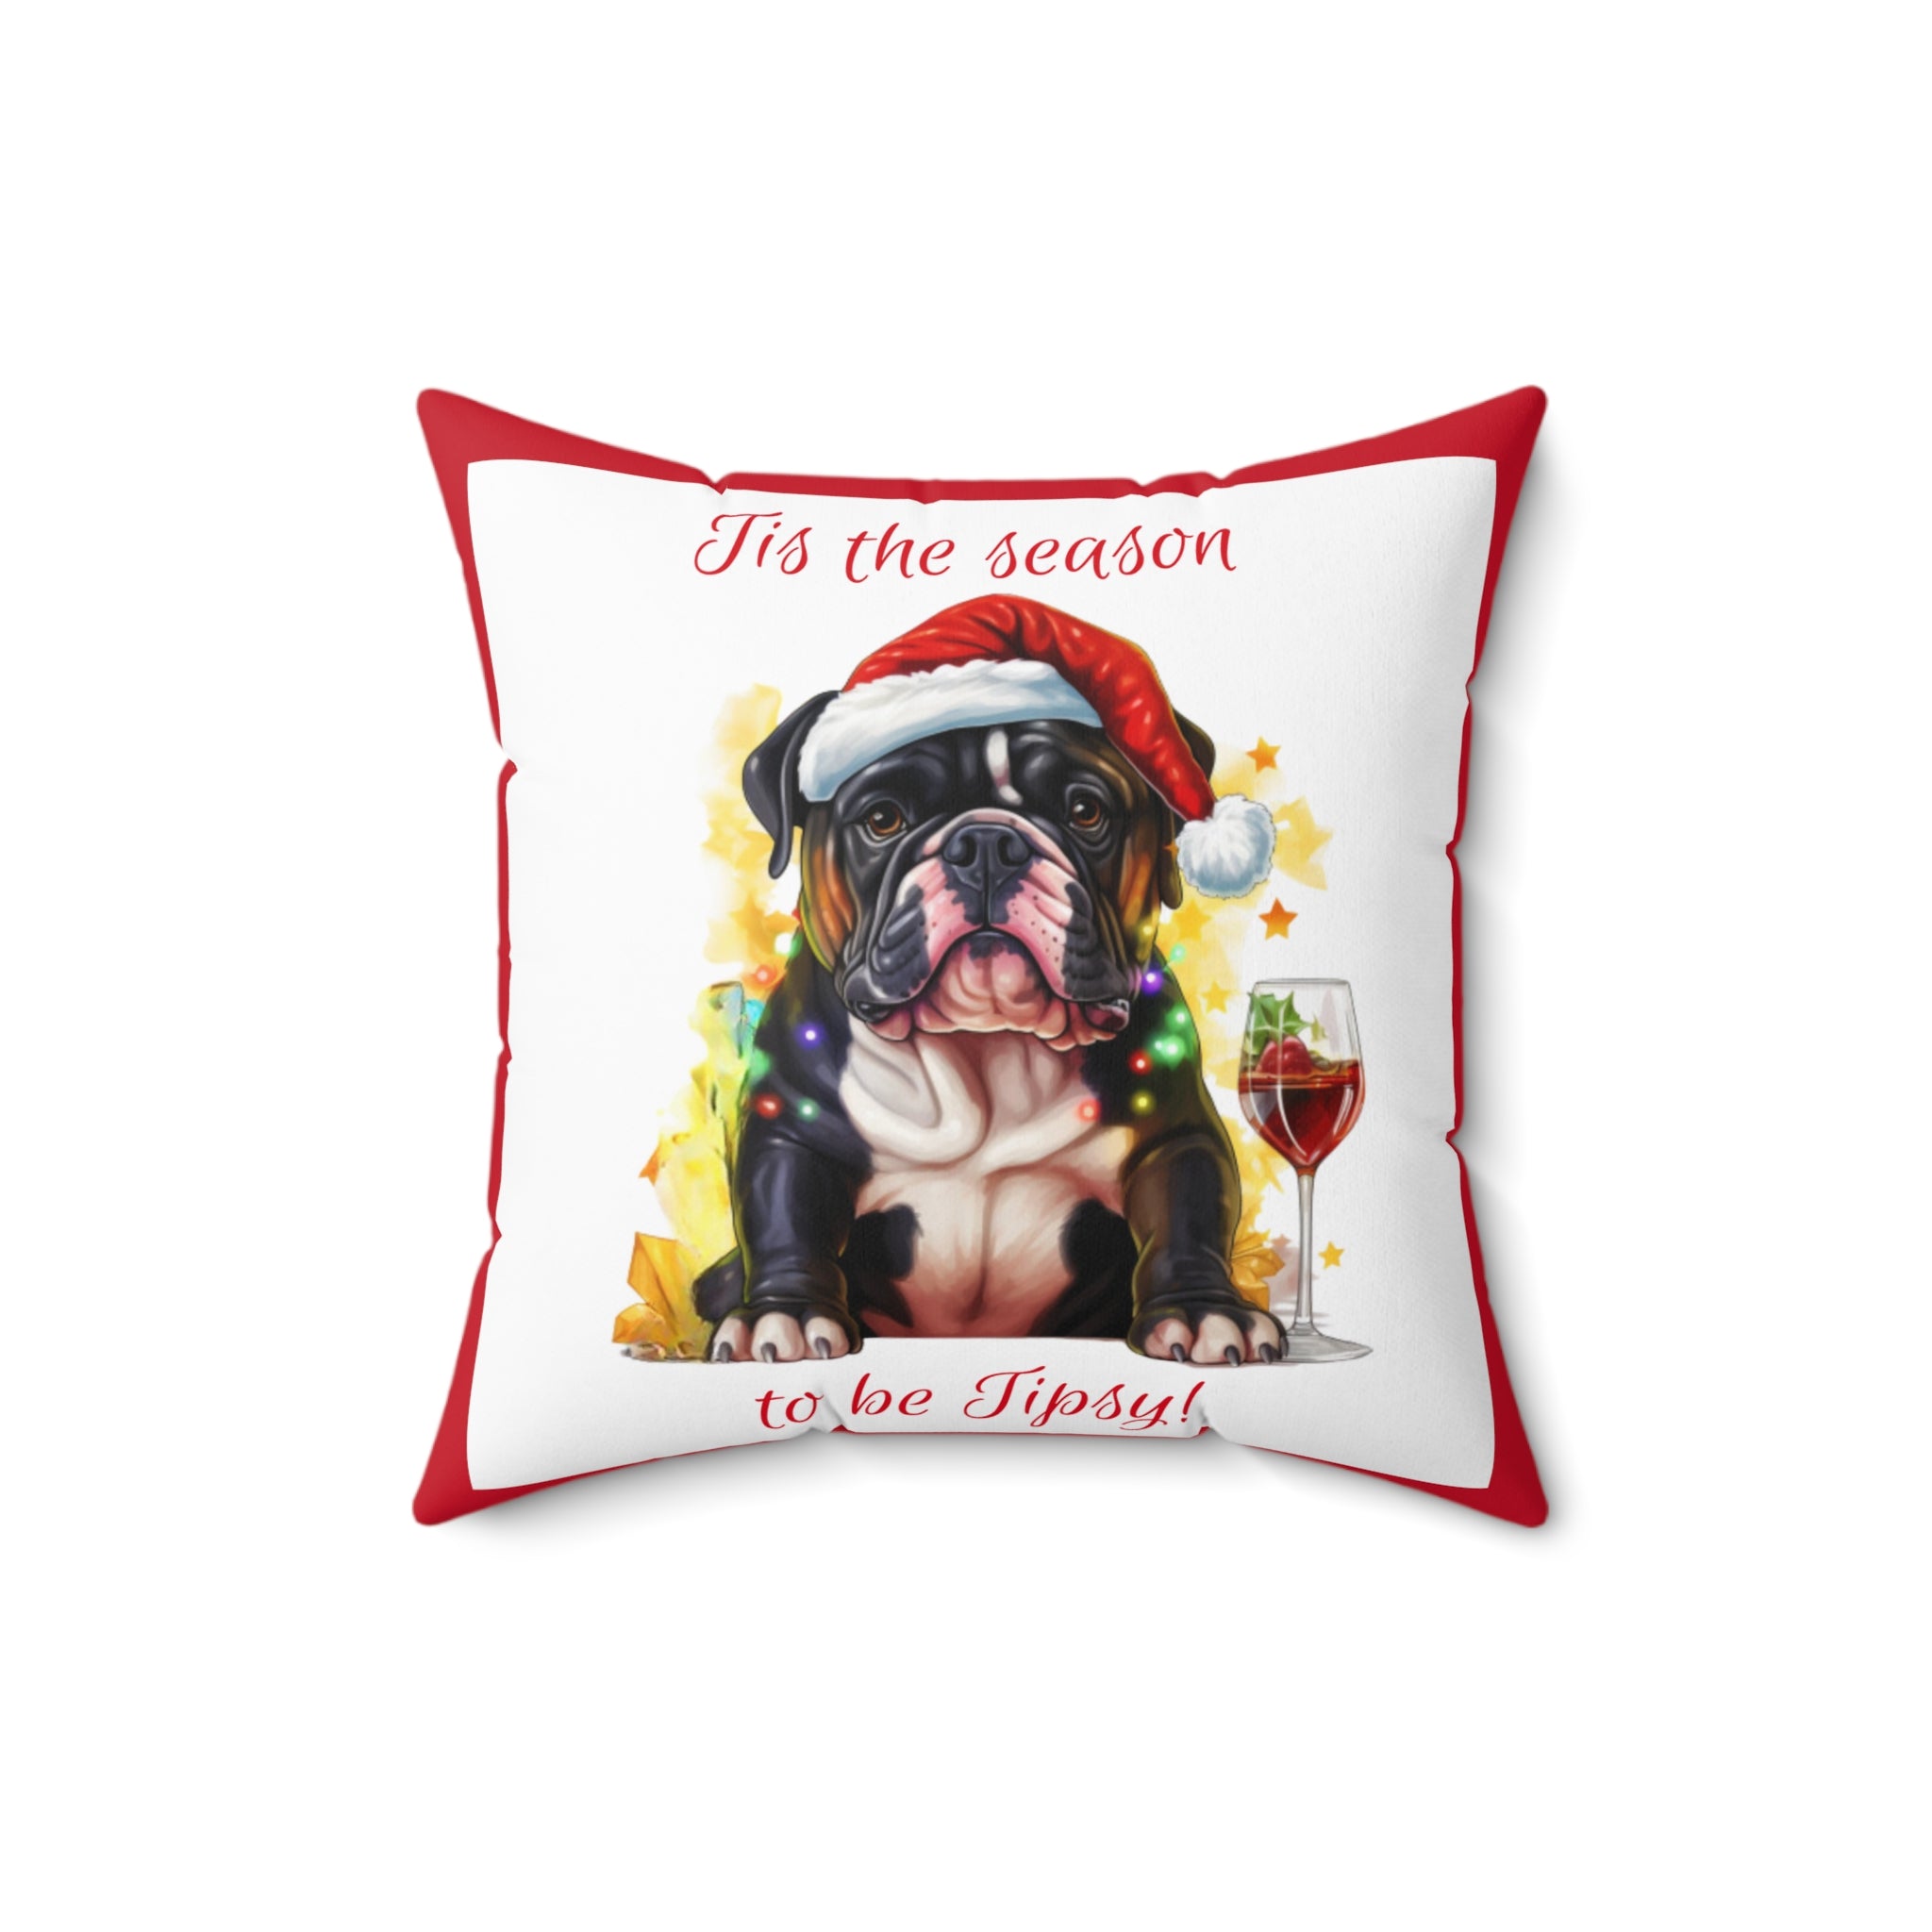 Tipsy Bully Holiday Pillow (Black English-Tis the Season-Red)